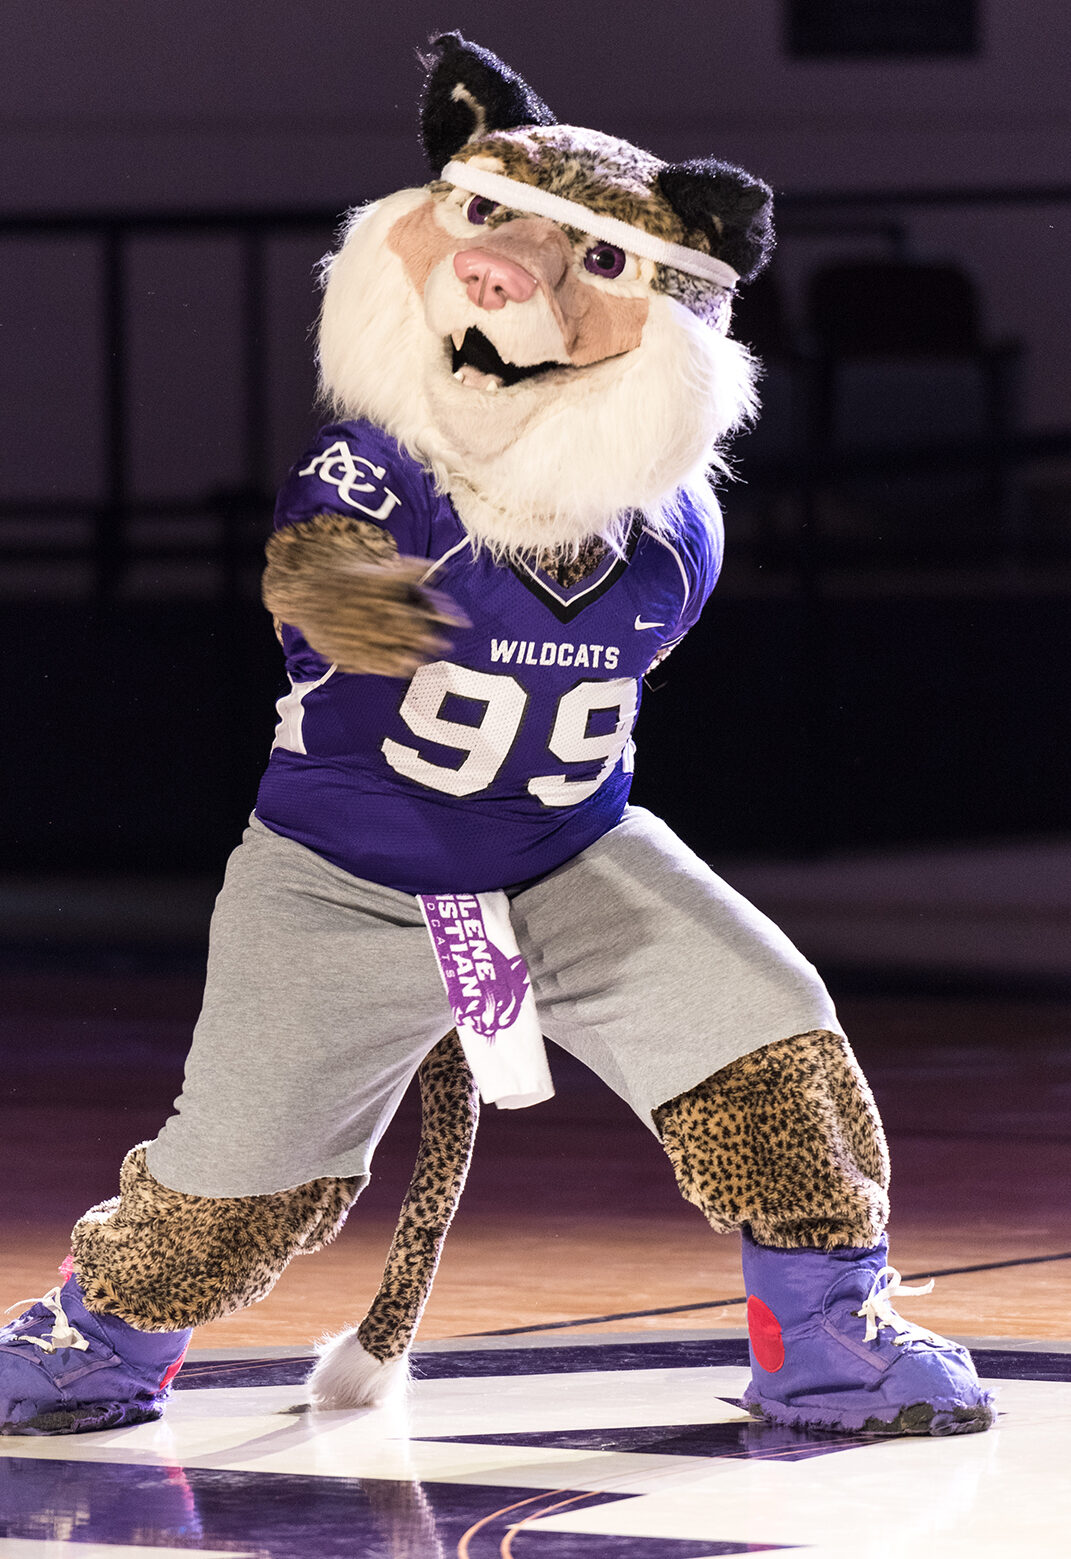 The ACU Wildcat mascot dancing